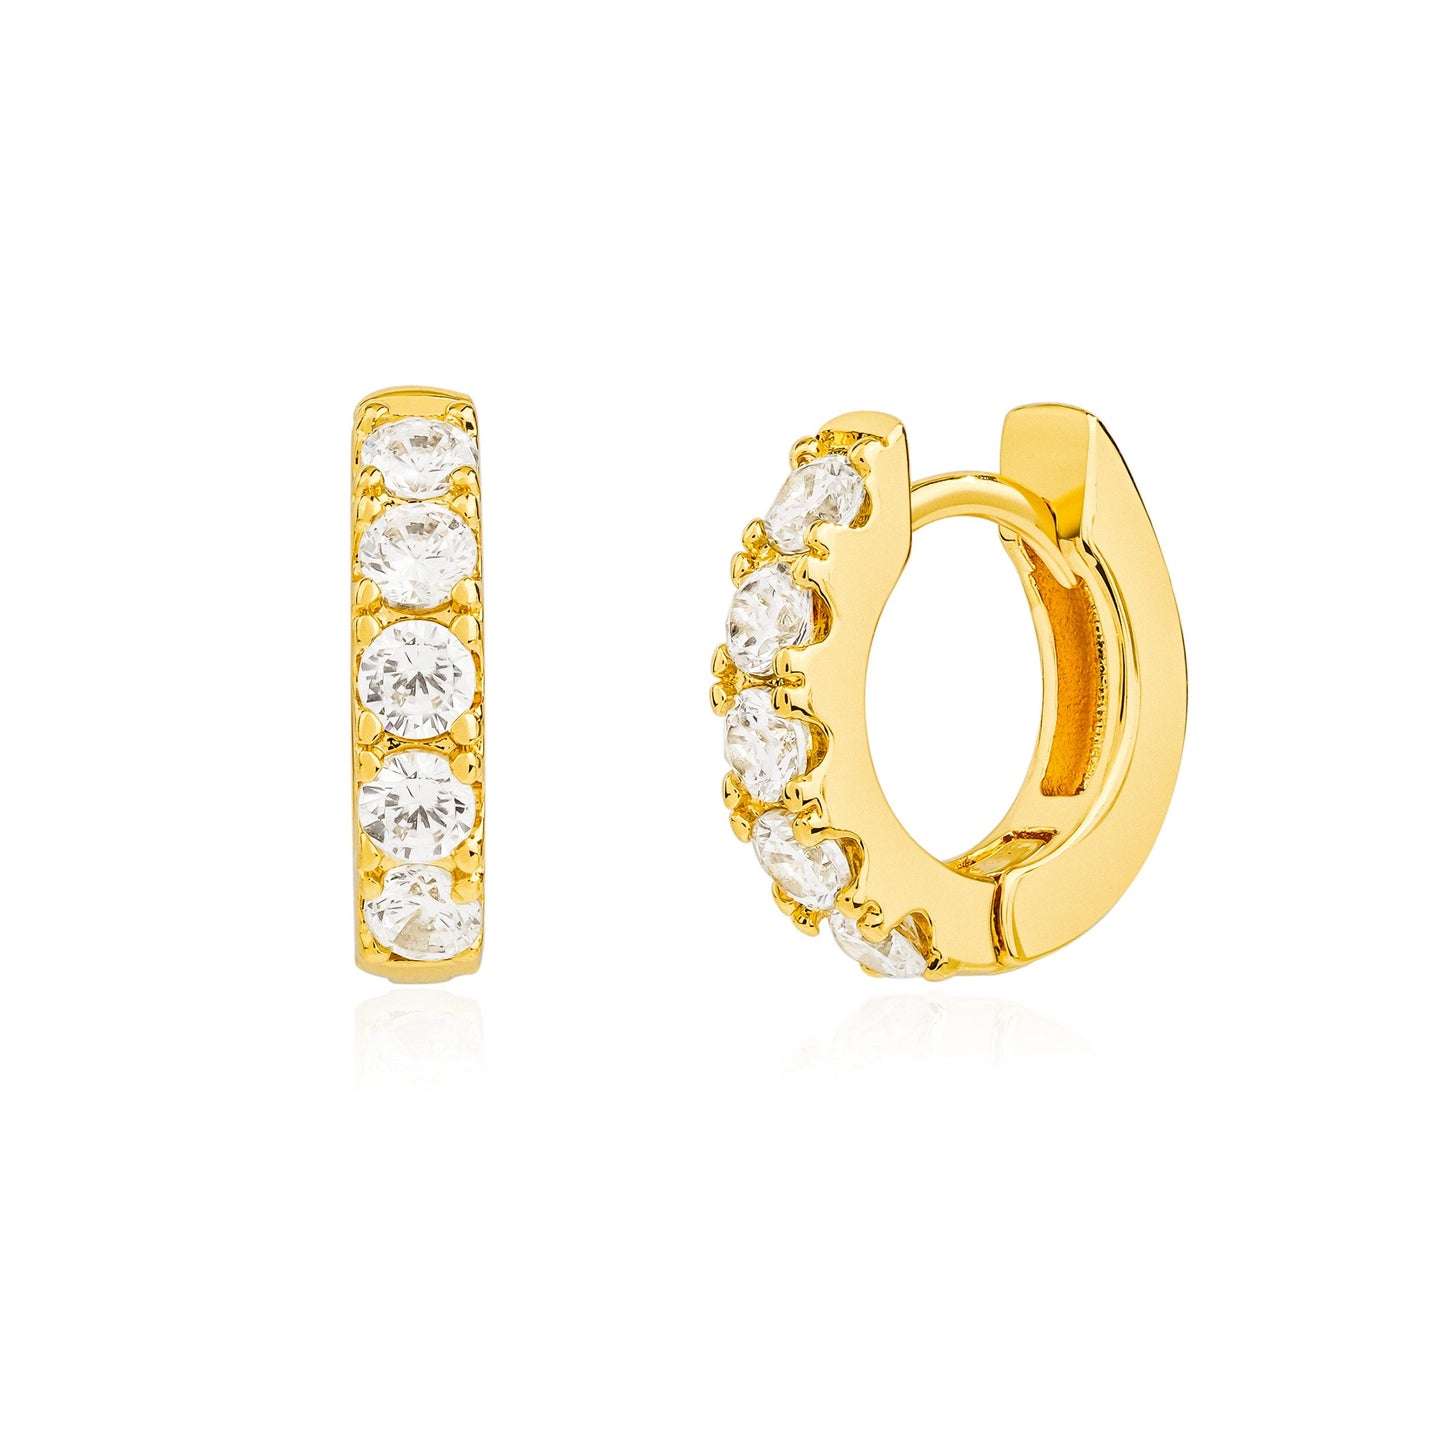 18k gold plated earrings cz stud baguette textured earrings